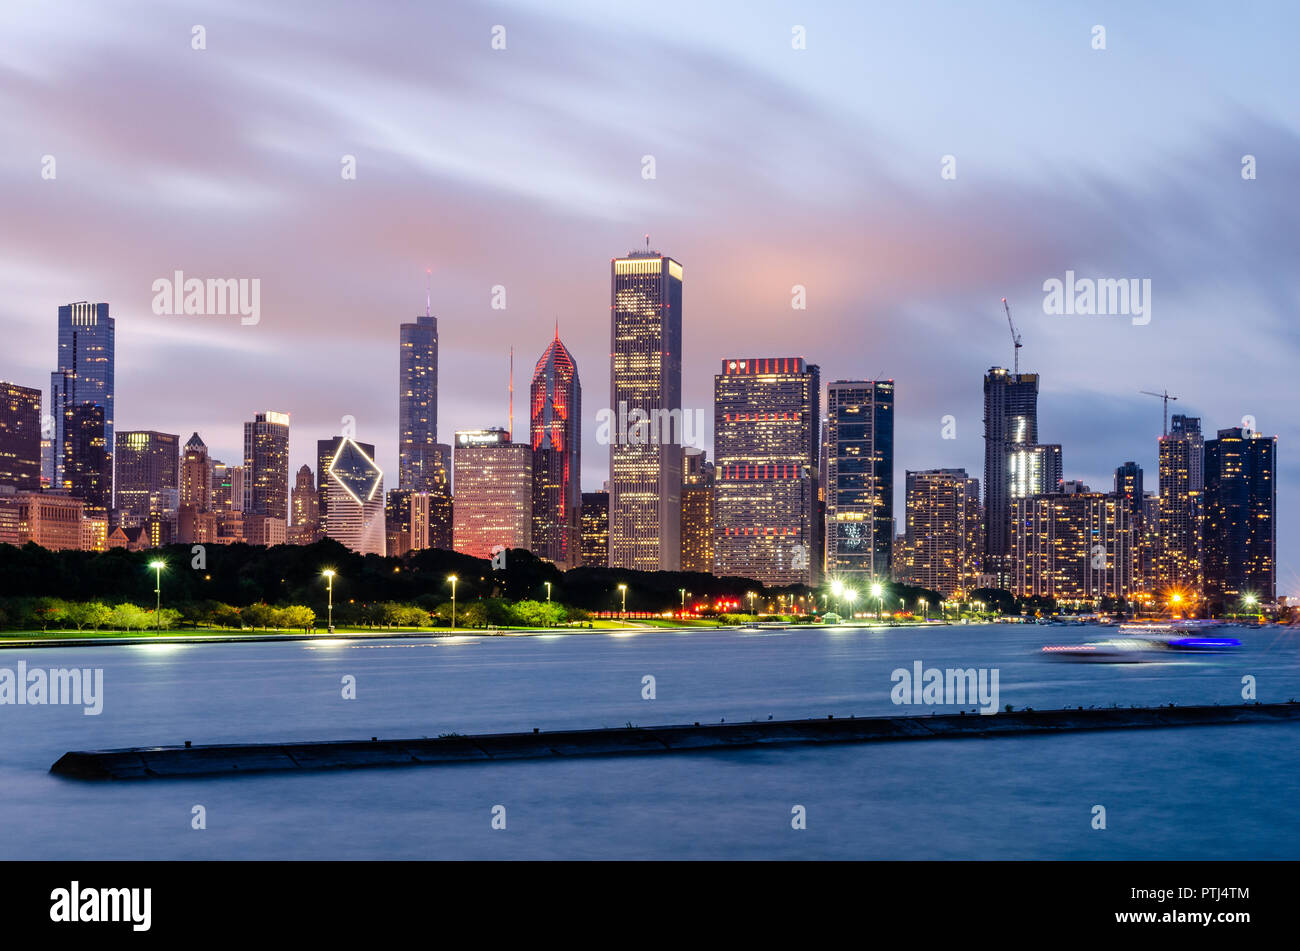 Chicago Loop Skyline at night Stock Photo